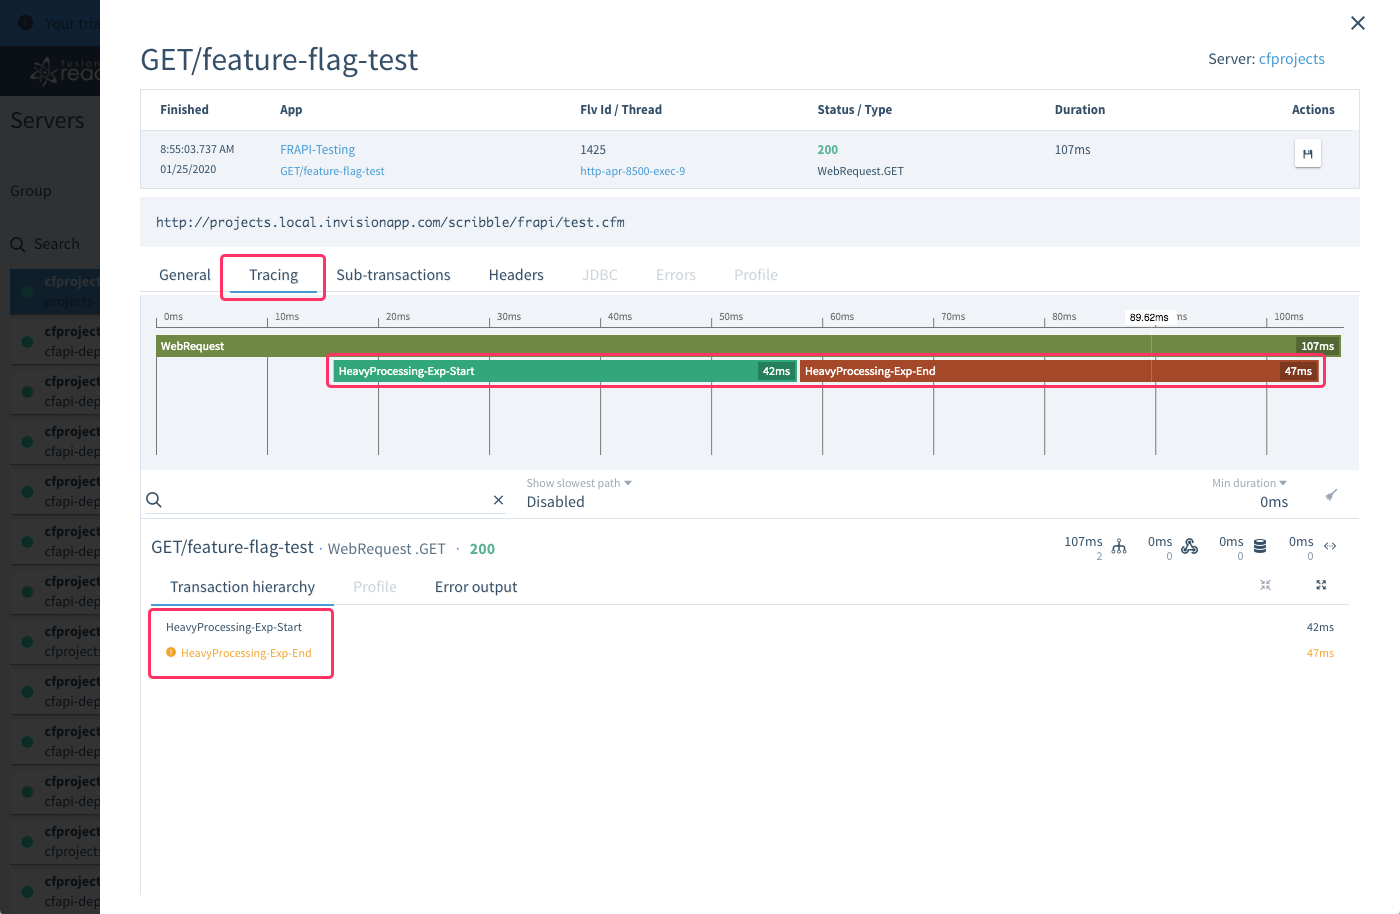 FusionReactor showing Tracing transaction segmentation in Cloud dashboard.